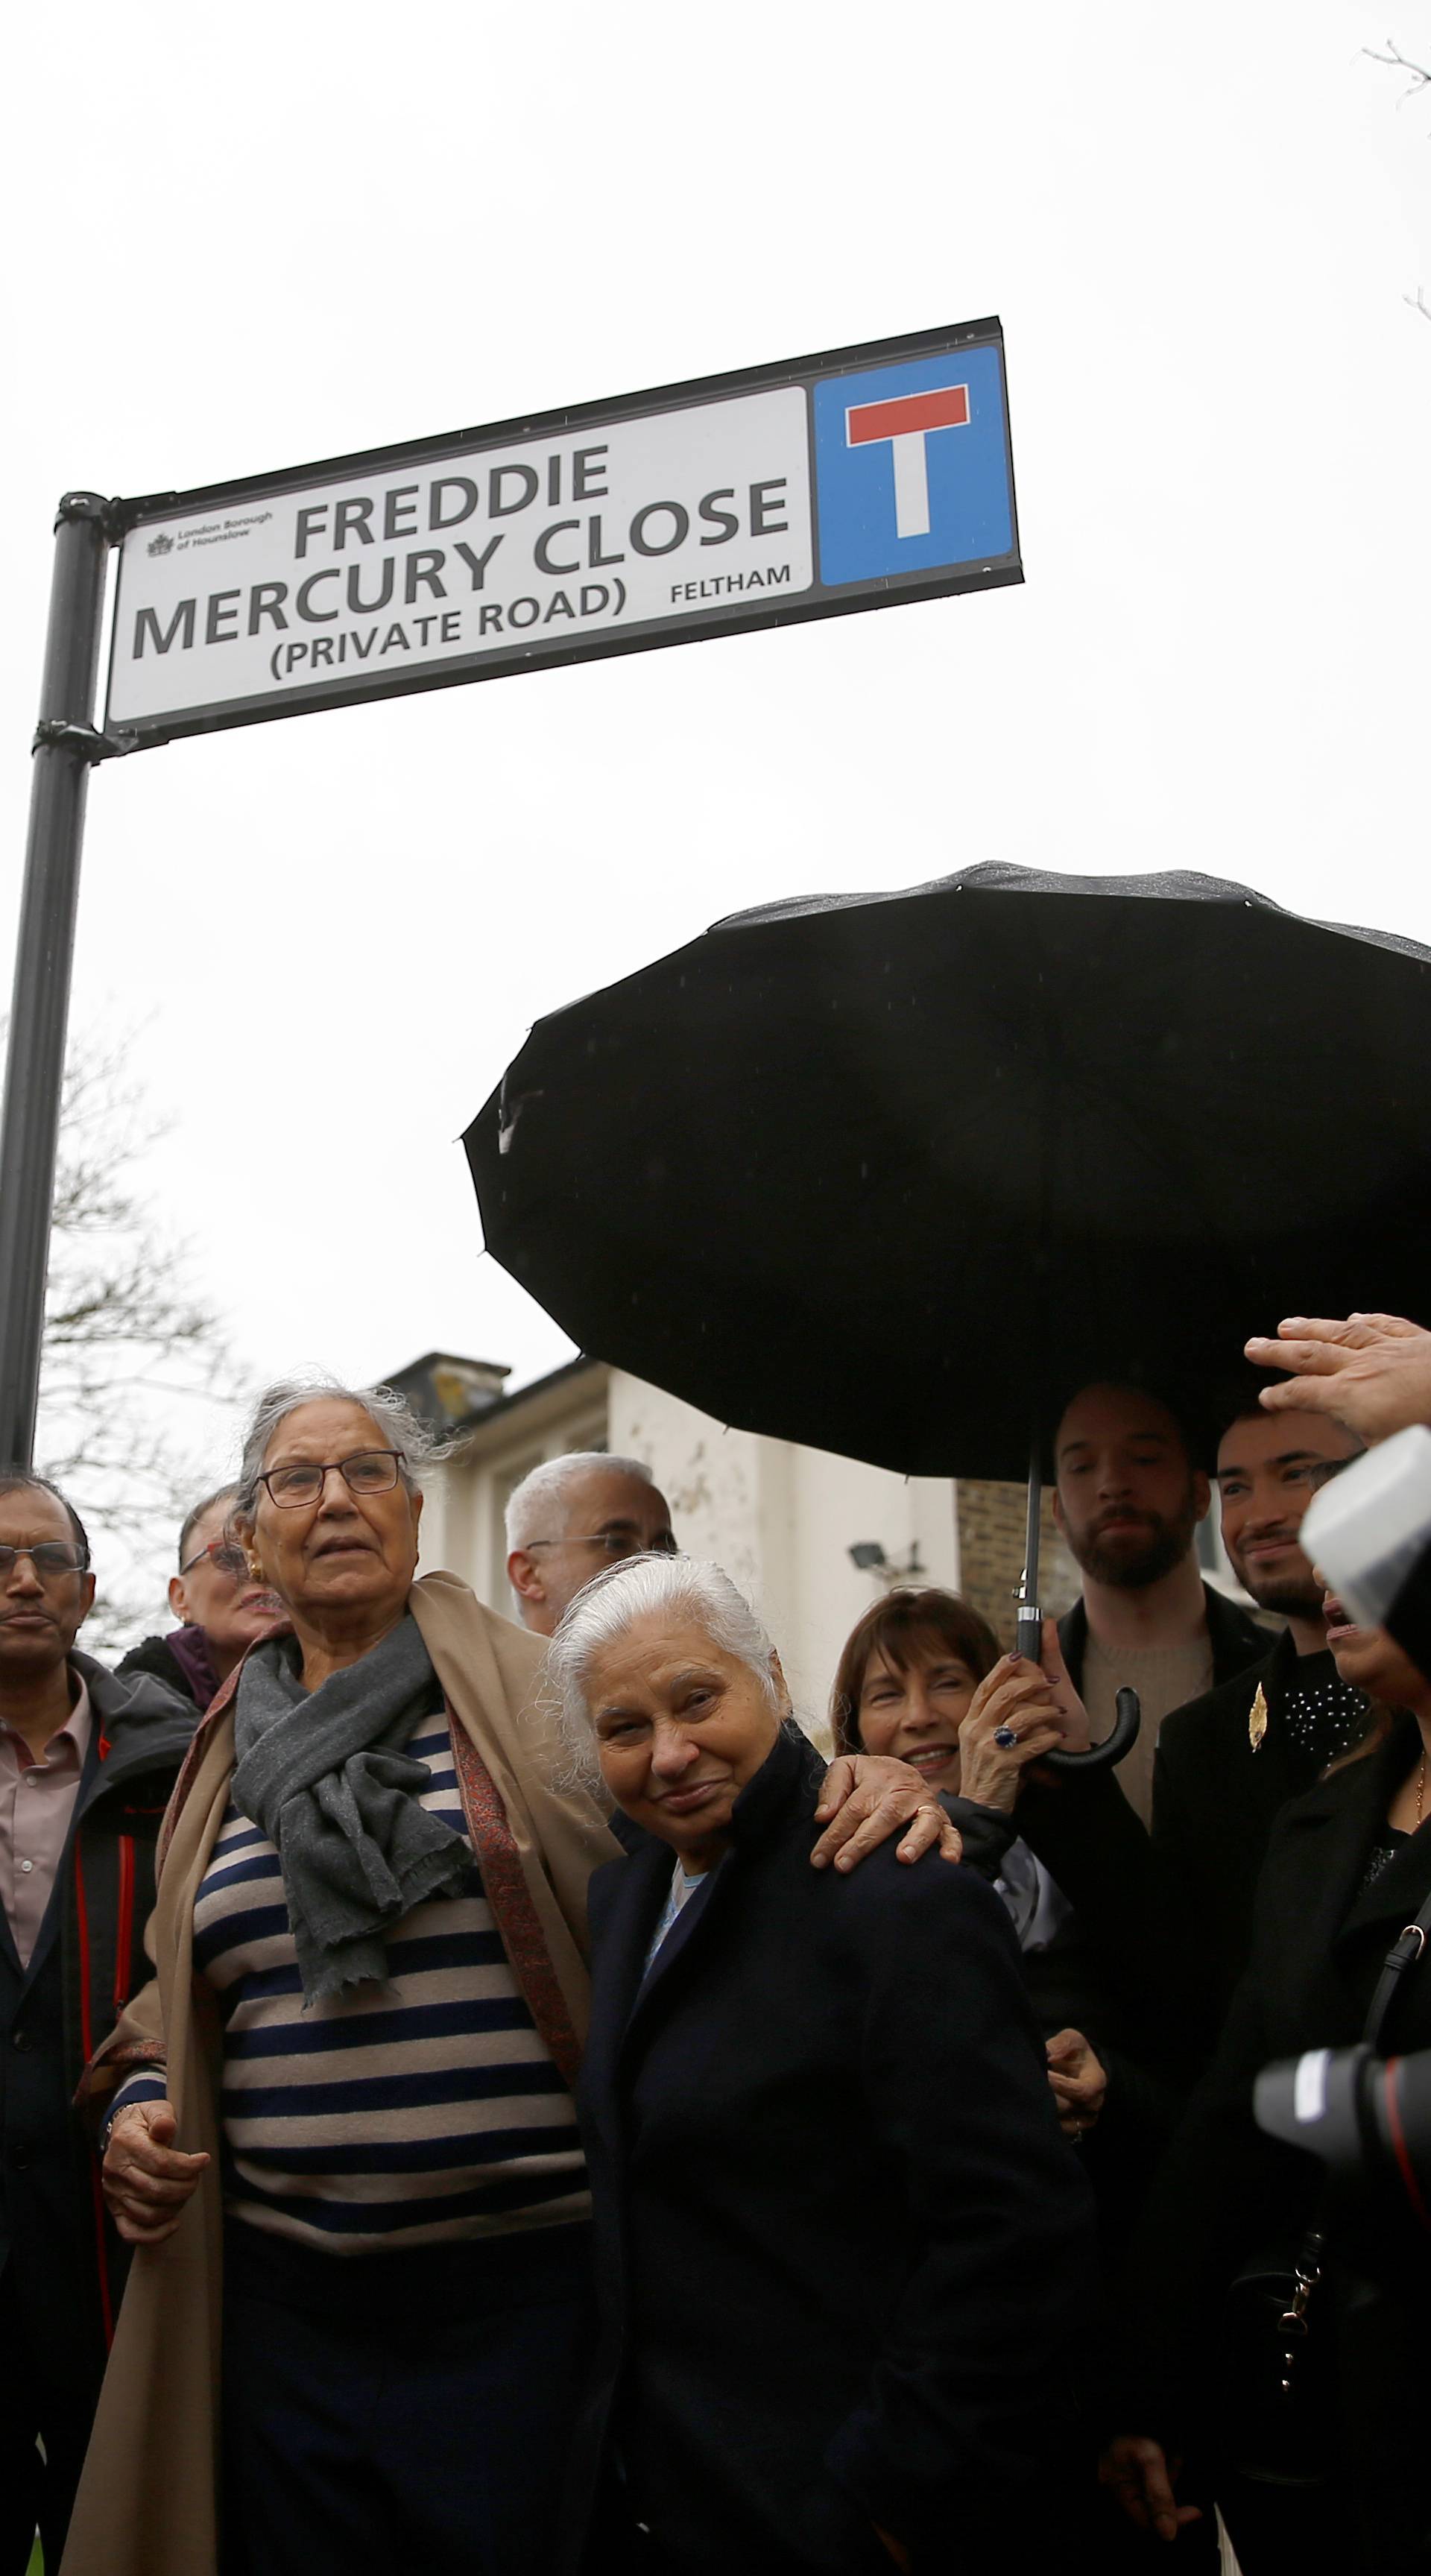 Ceremony to rename street in Feltham "Freddie Mercury Close", in Feltham, Greater London